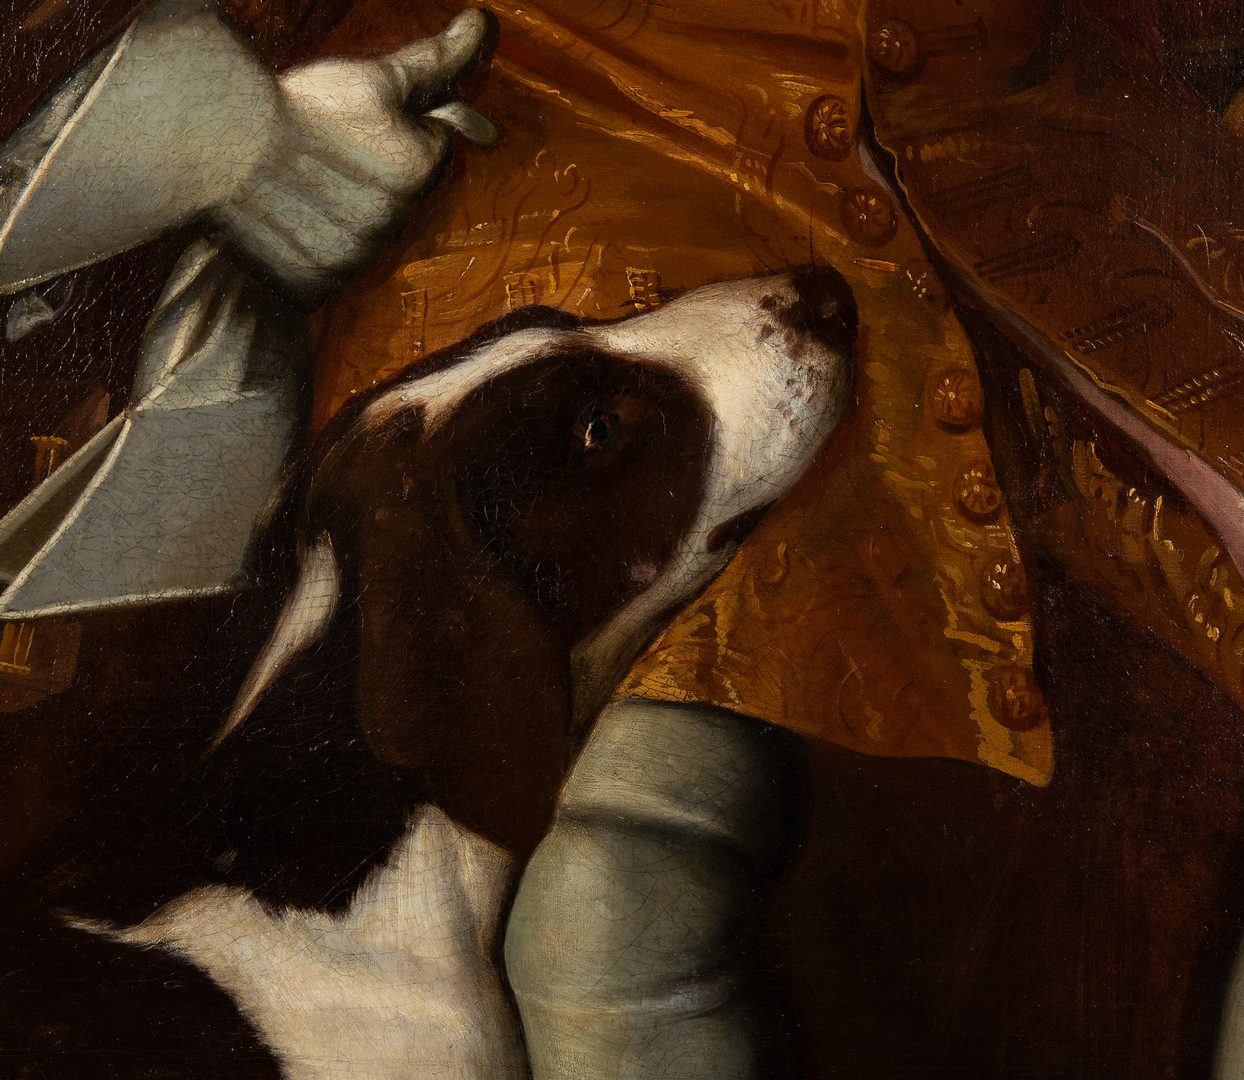 Lot 81: Circle of Thos. Hudson – Jonathan Richardson, Portrait of Man with Dog